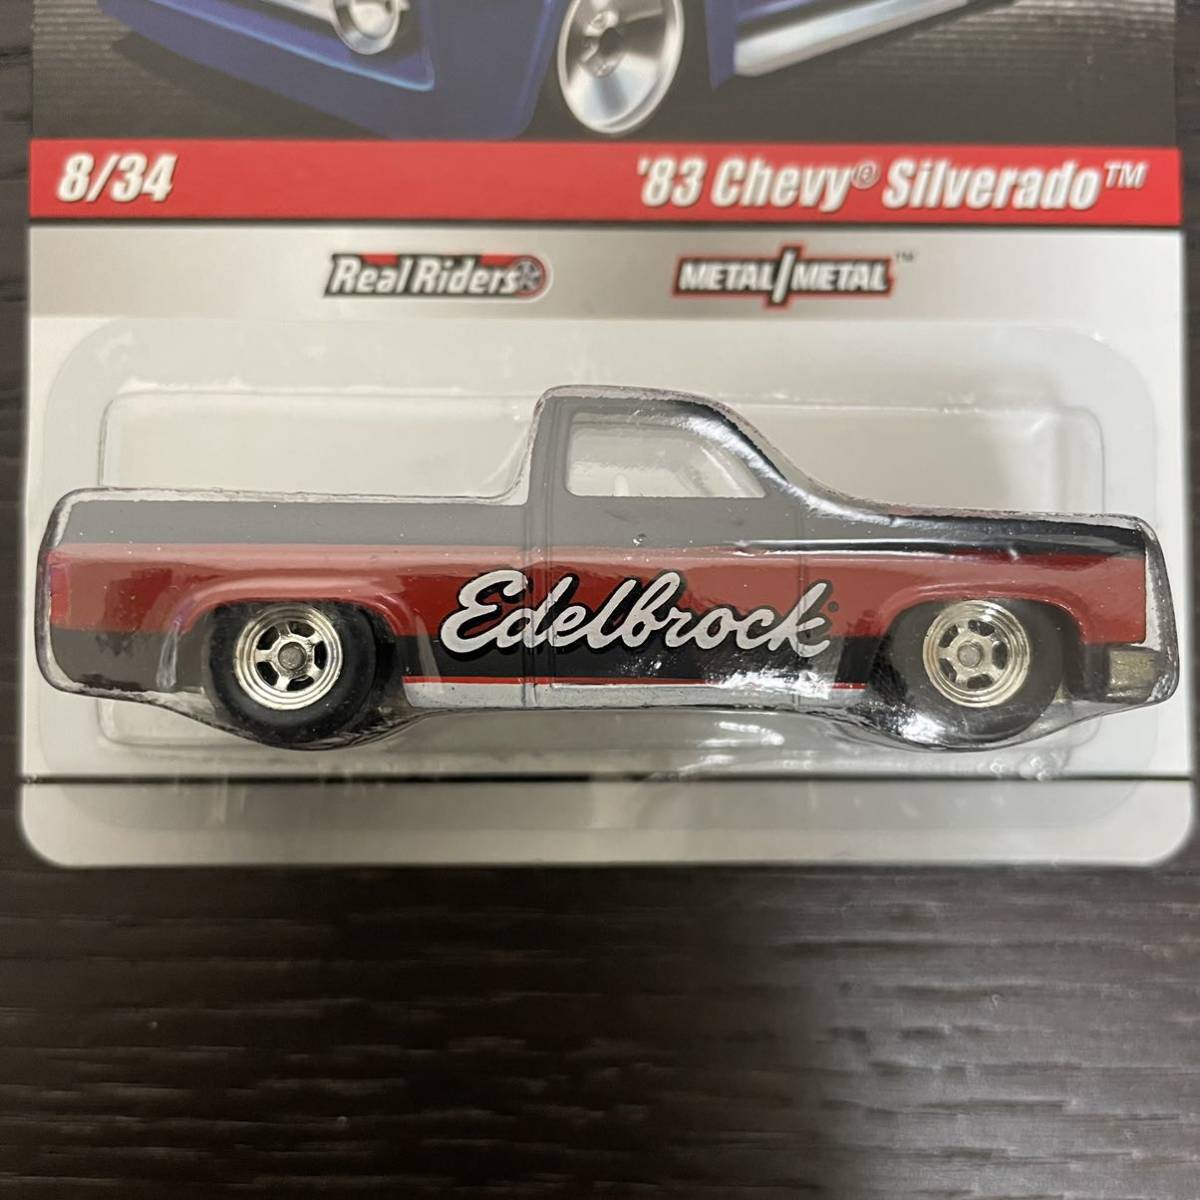 HW '83 Chevy Silverado Red Black Delivery Slick Rides/'83 シェビー シルバラード 赤 黒 レッド ブラック デリバリー_画像2